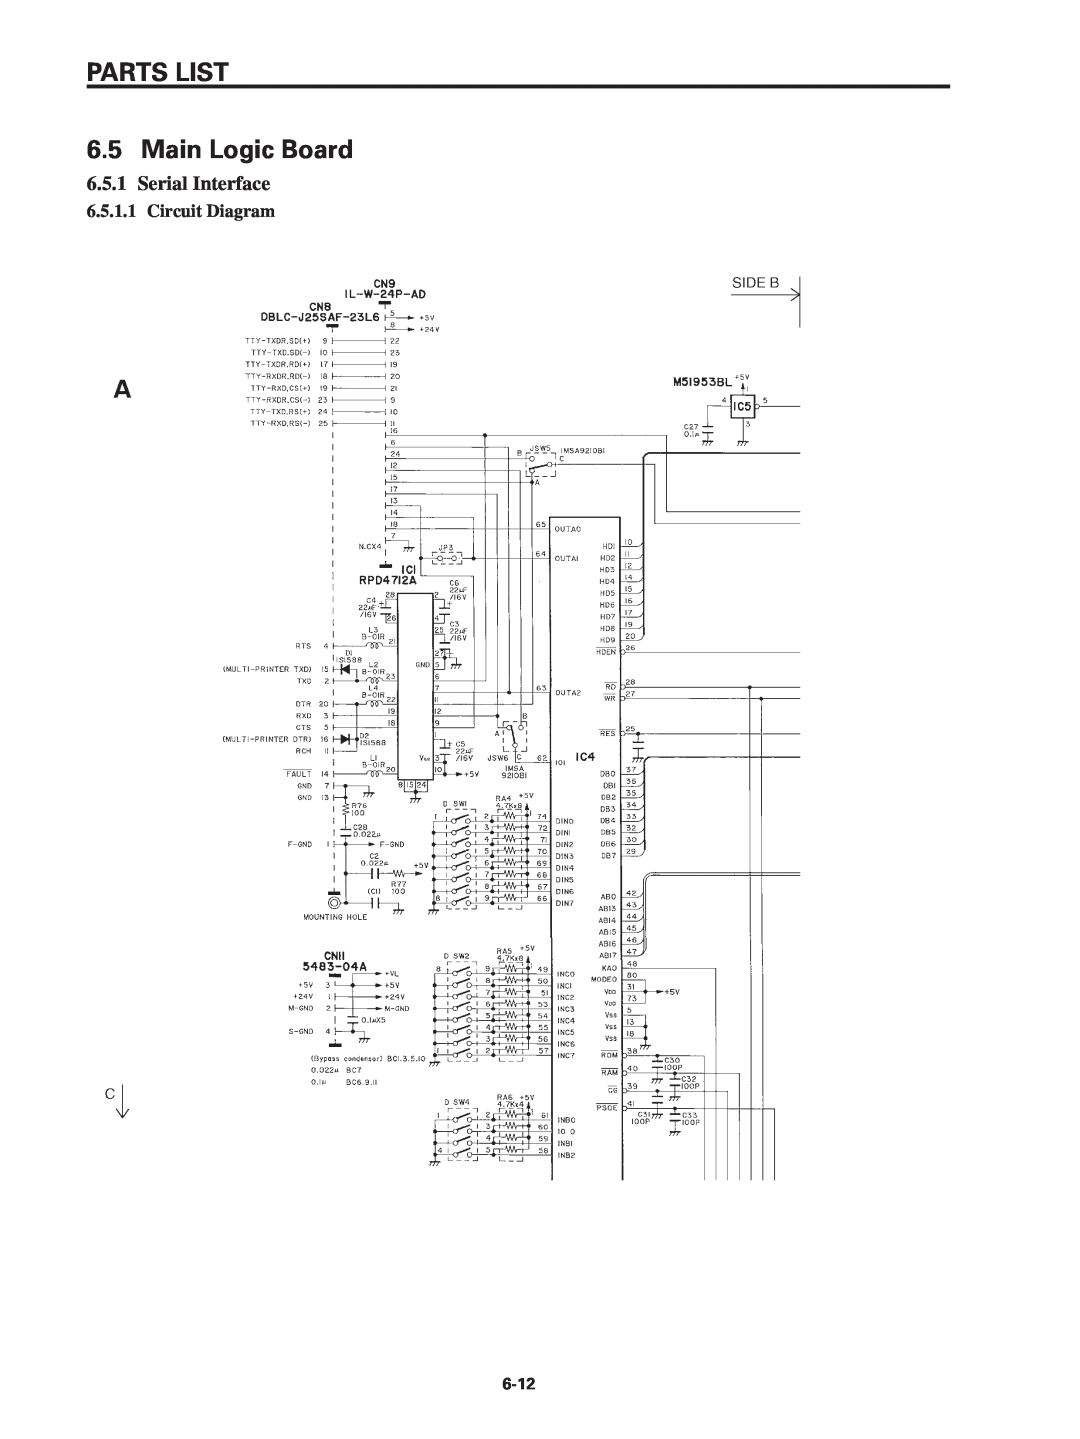 Star Micronics SP320S technical manual PARTS LIST 6.5 Main Logic Board, Serial Interface, Circuit Diagram 